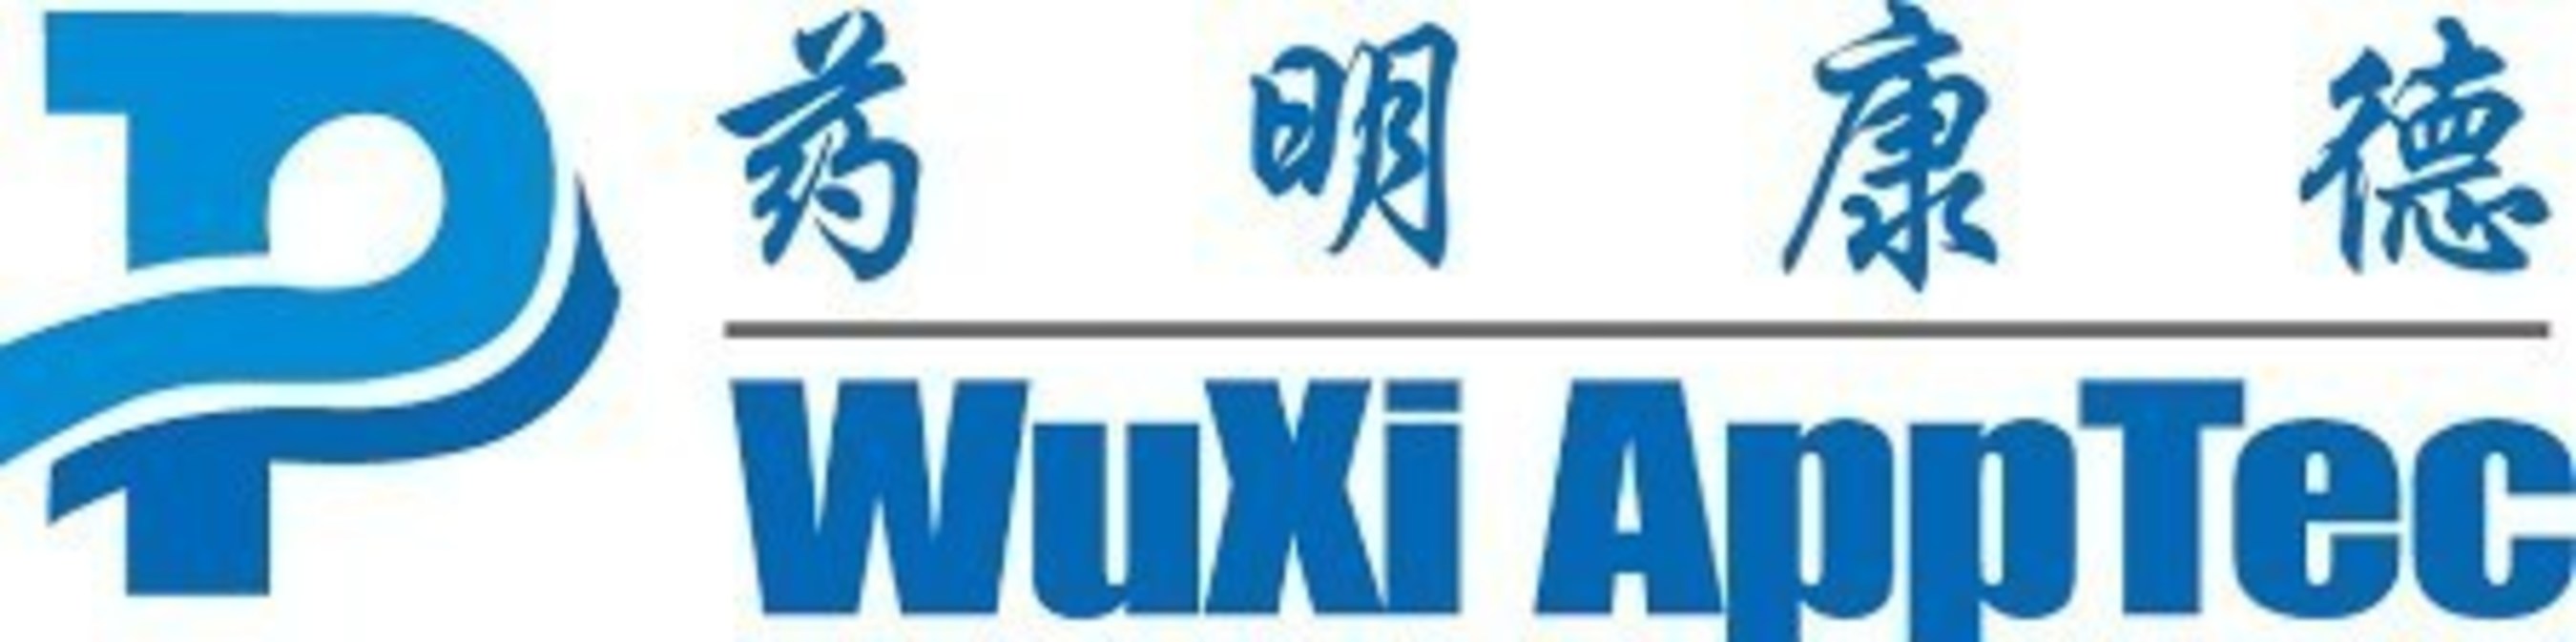 WuXi AppTec logo (PRNewsFoto/WuXi NextCODE)